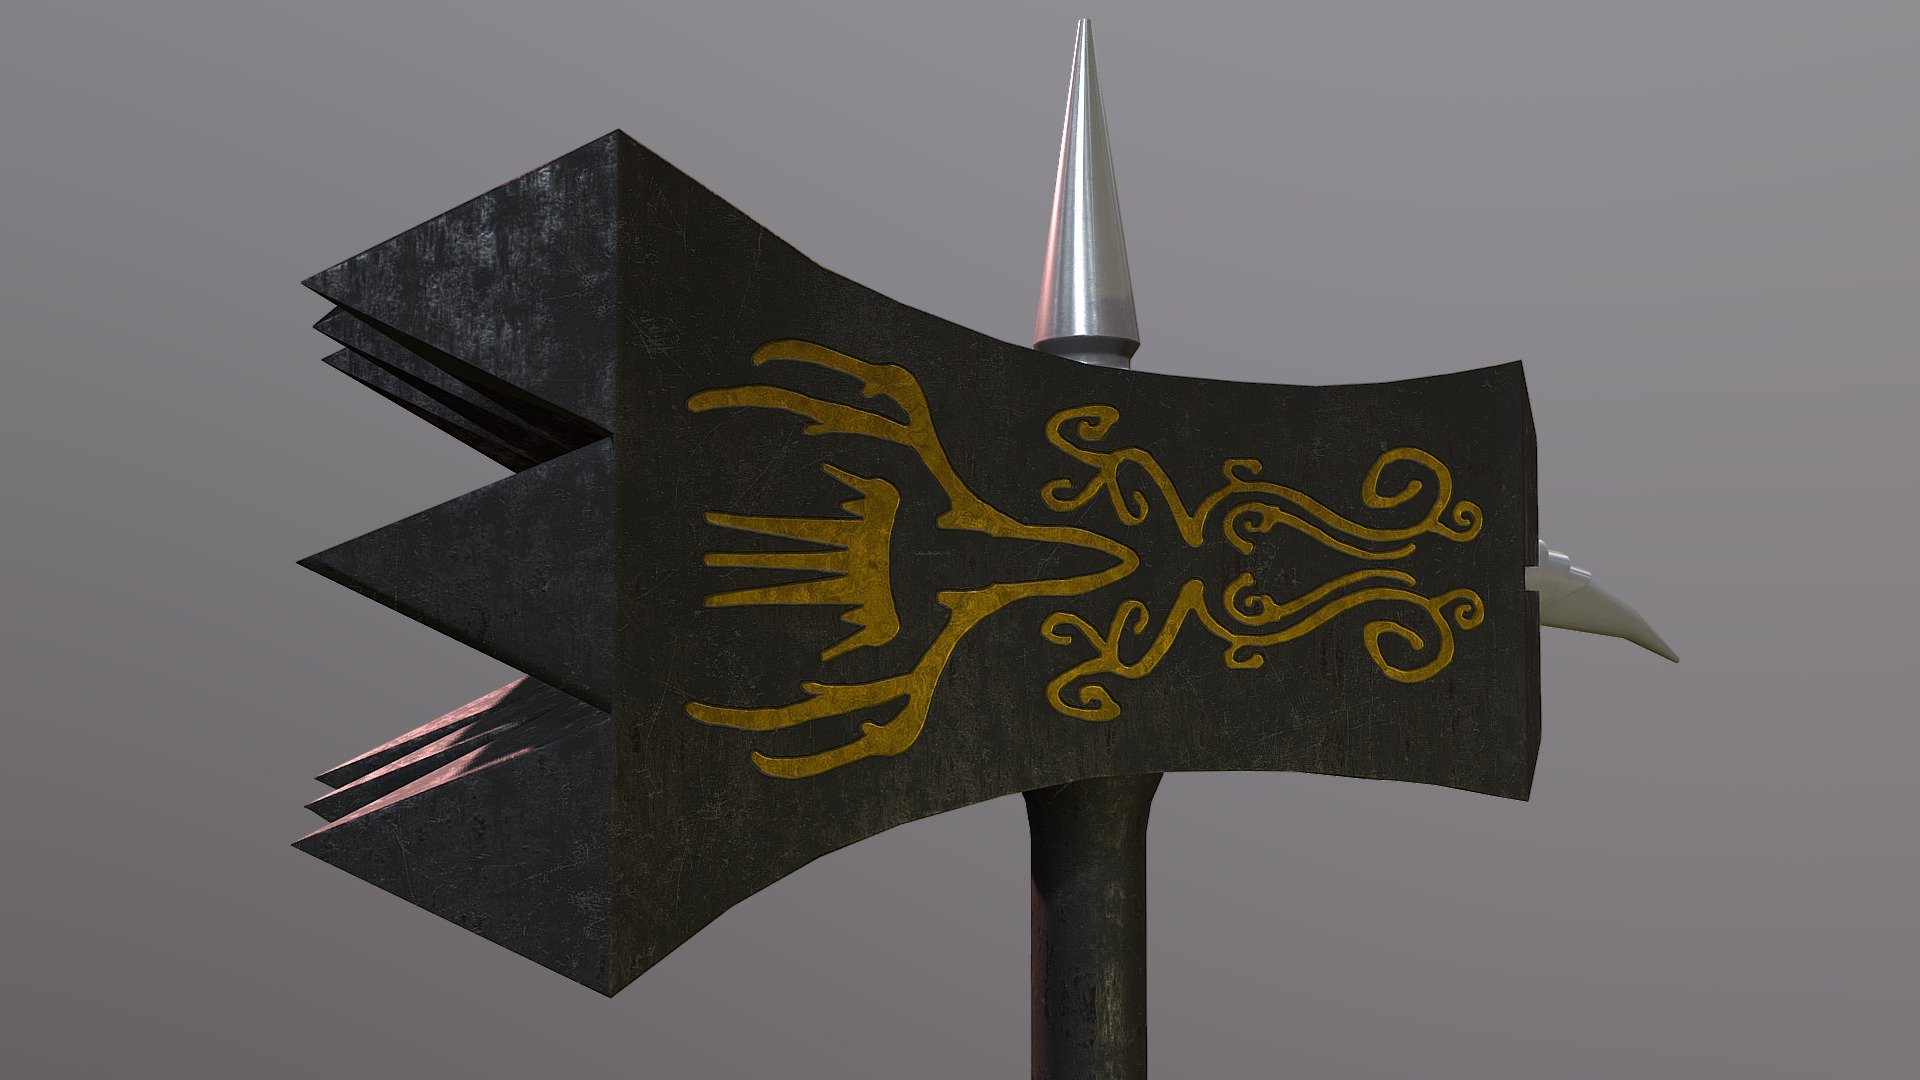 Robert Baratheon's War Hammer